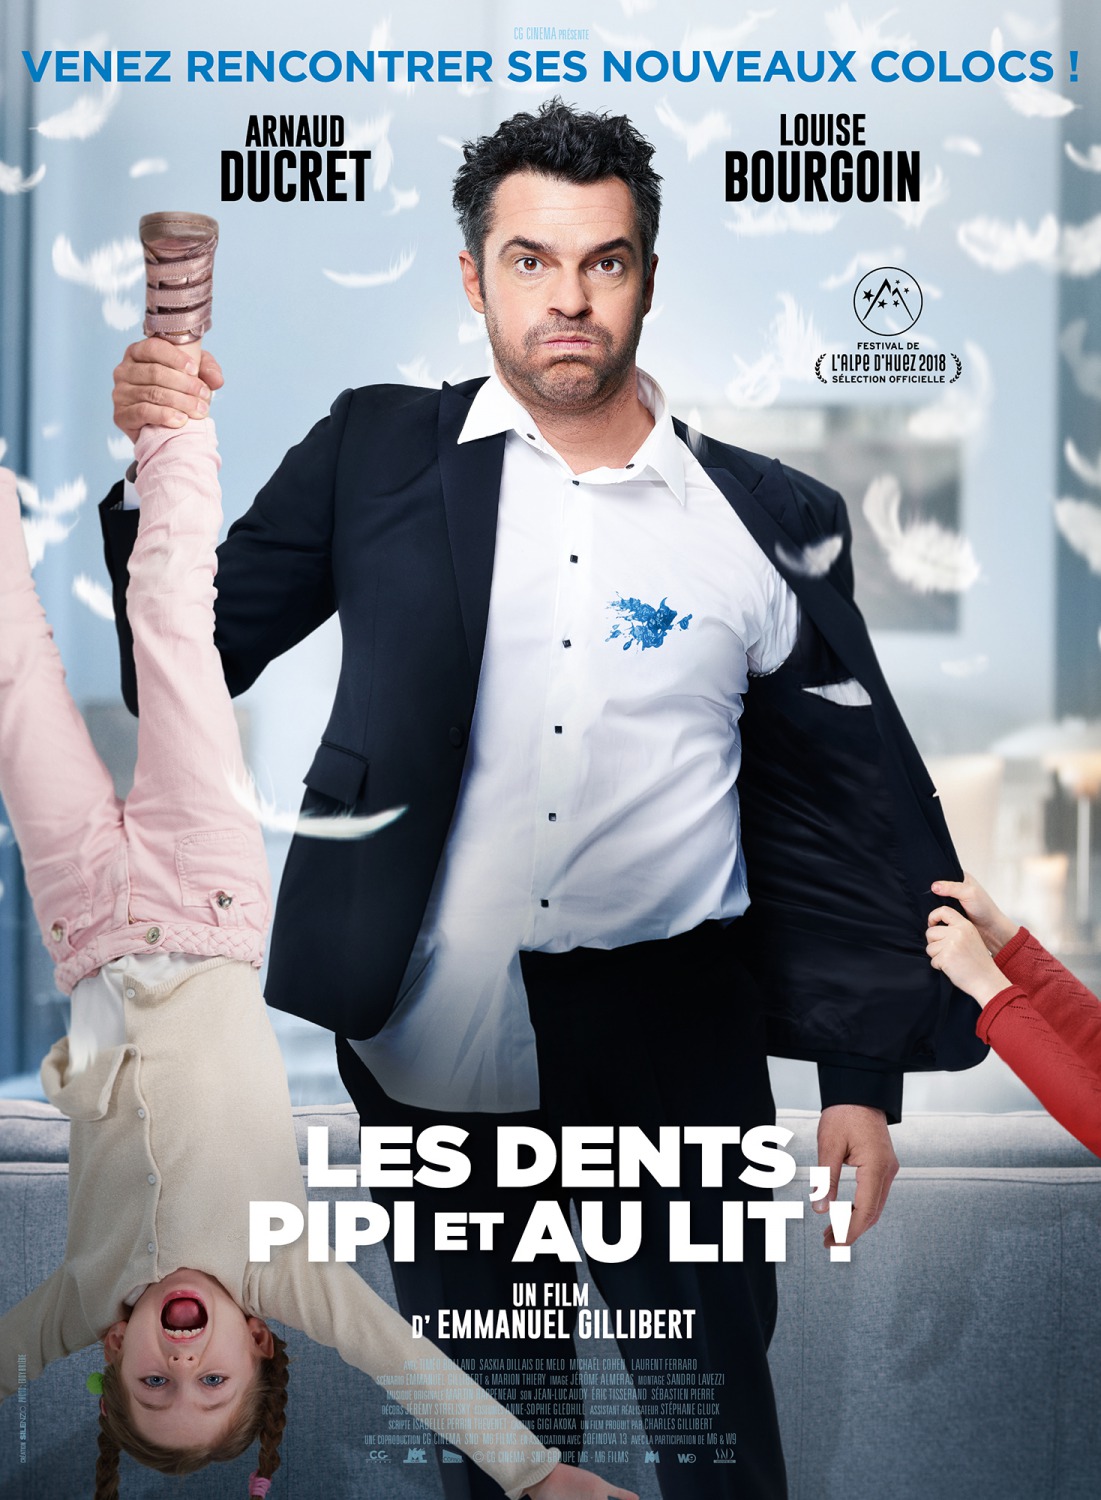 Extra Large Movie Poster Image for Les dents, pipi et au lit (#2 of 2)